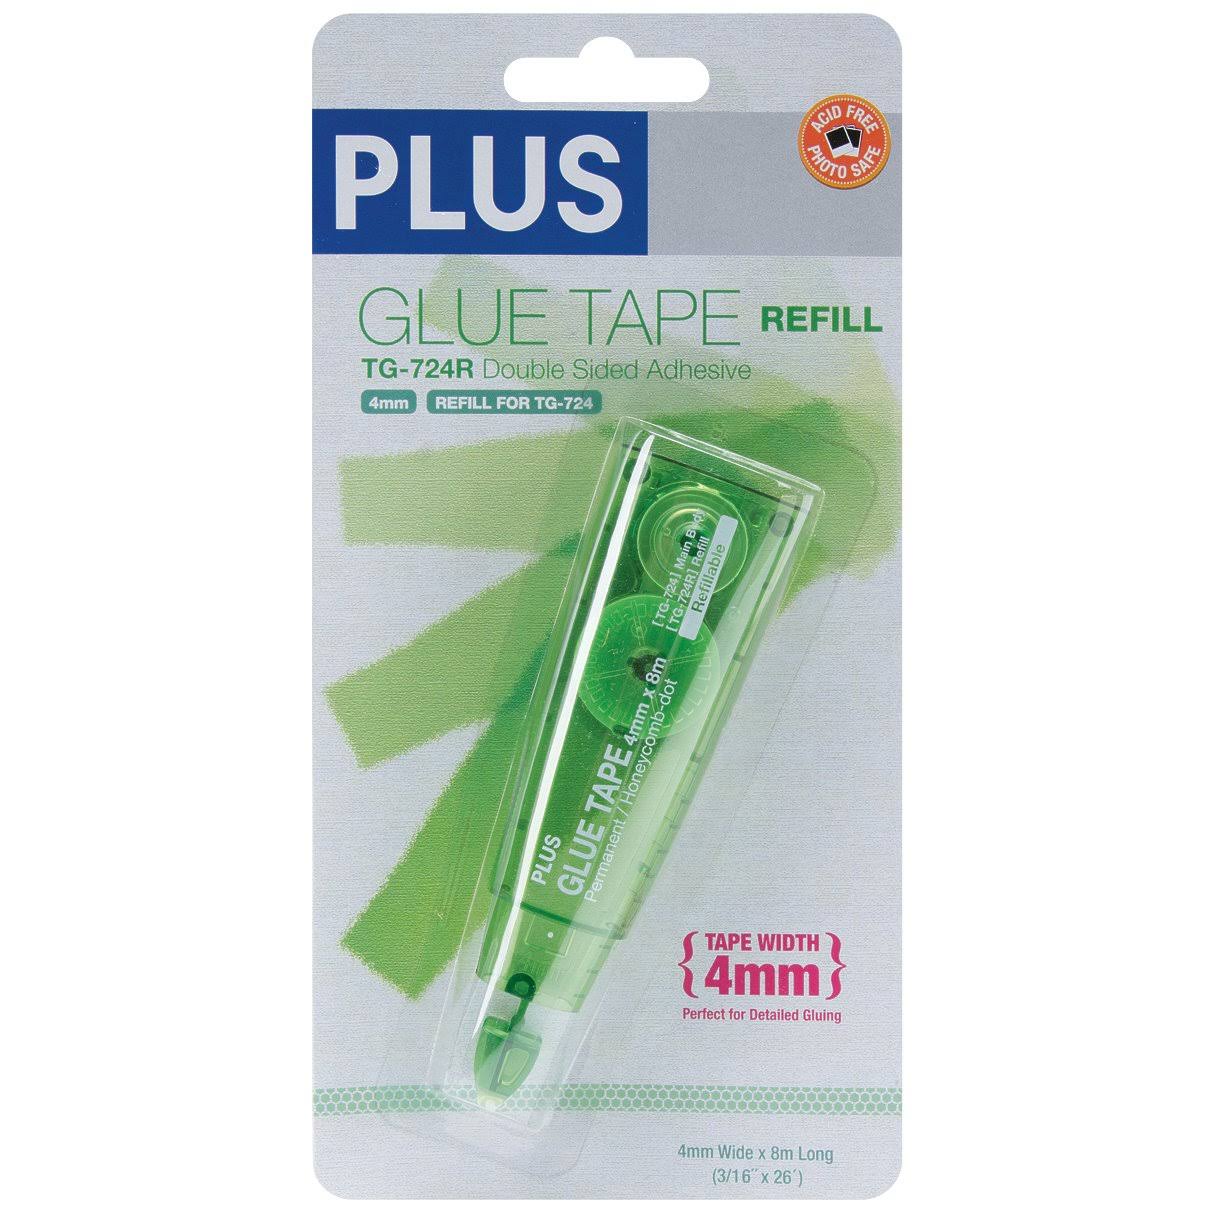 Plus TG-724 Glue Tape Refill - Green, 0.16" Wide